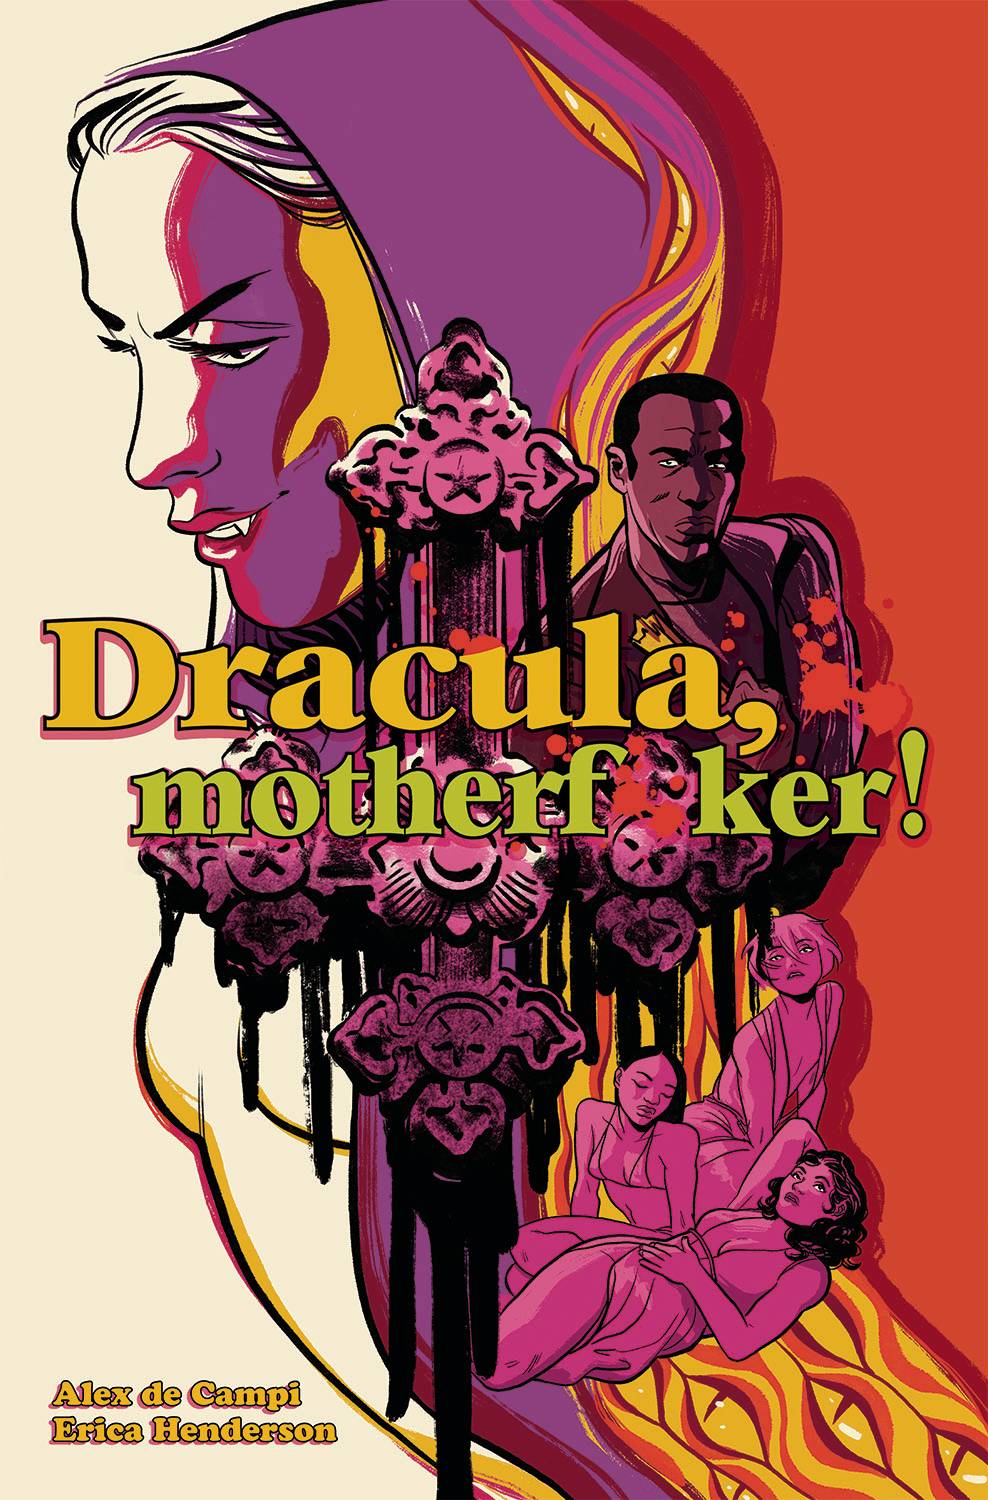 Dracula, Motherf**ker! HC